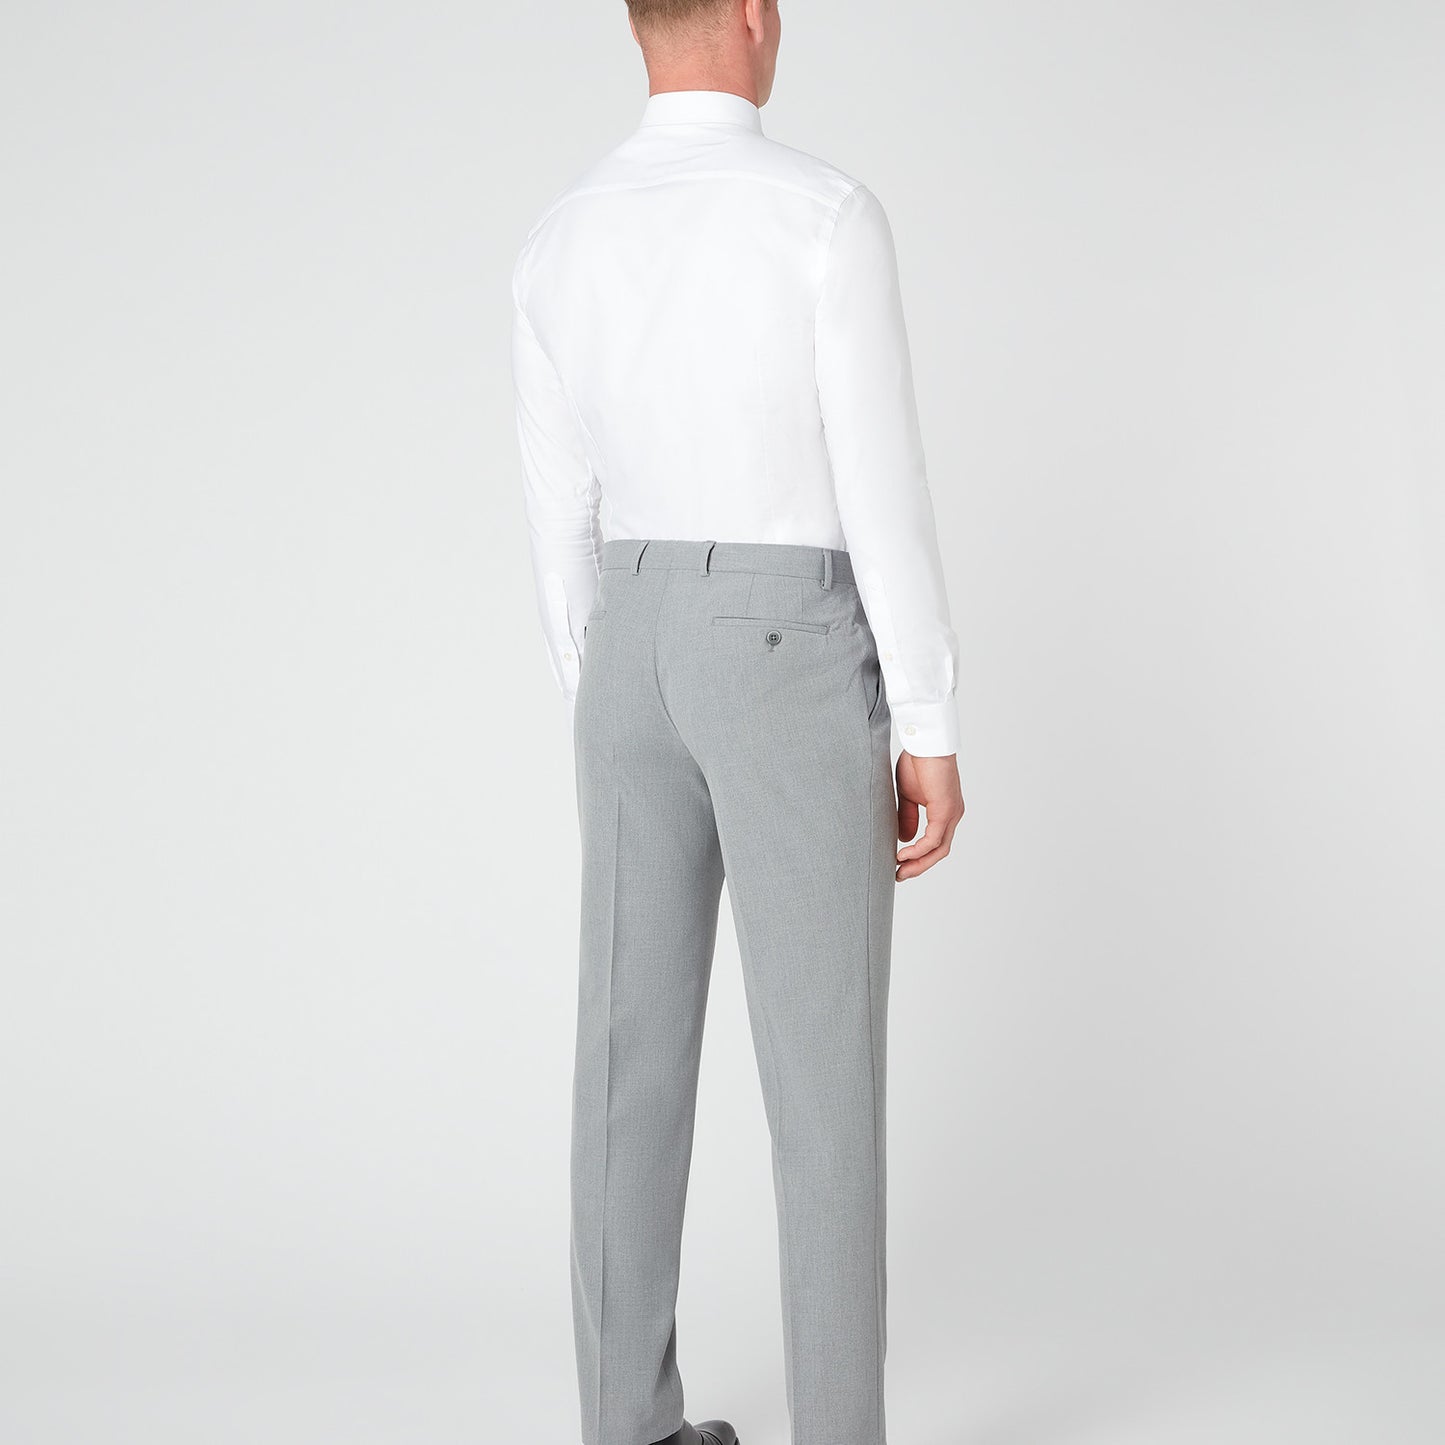 Remus Uomo 71770 05 Light Grey Tapered Suit Trouser